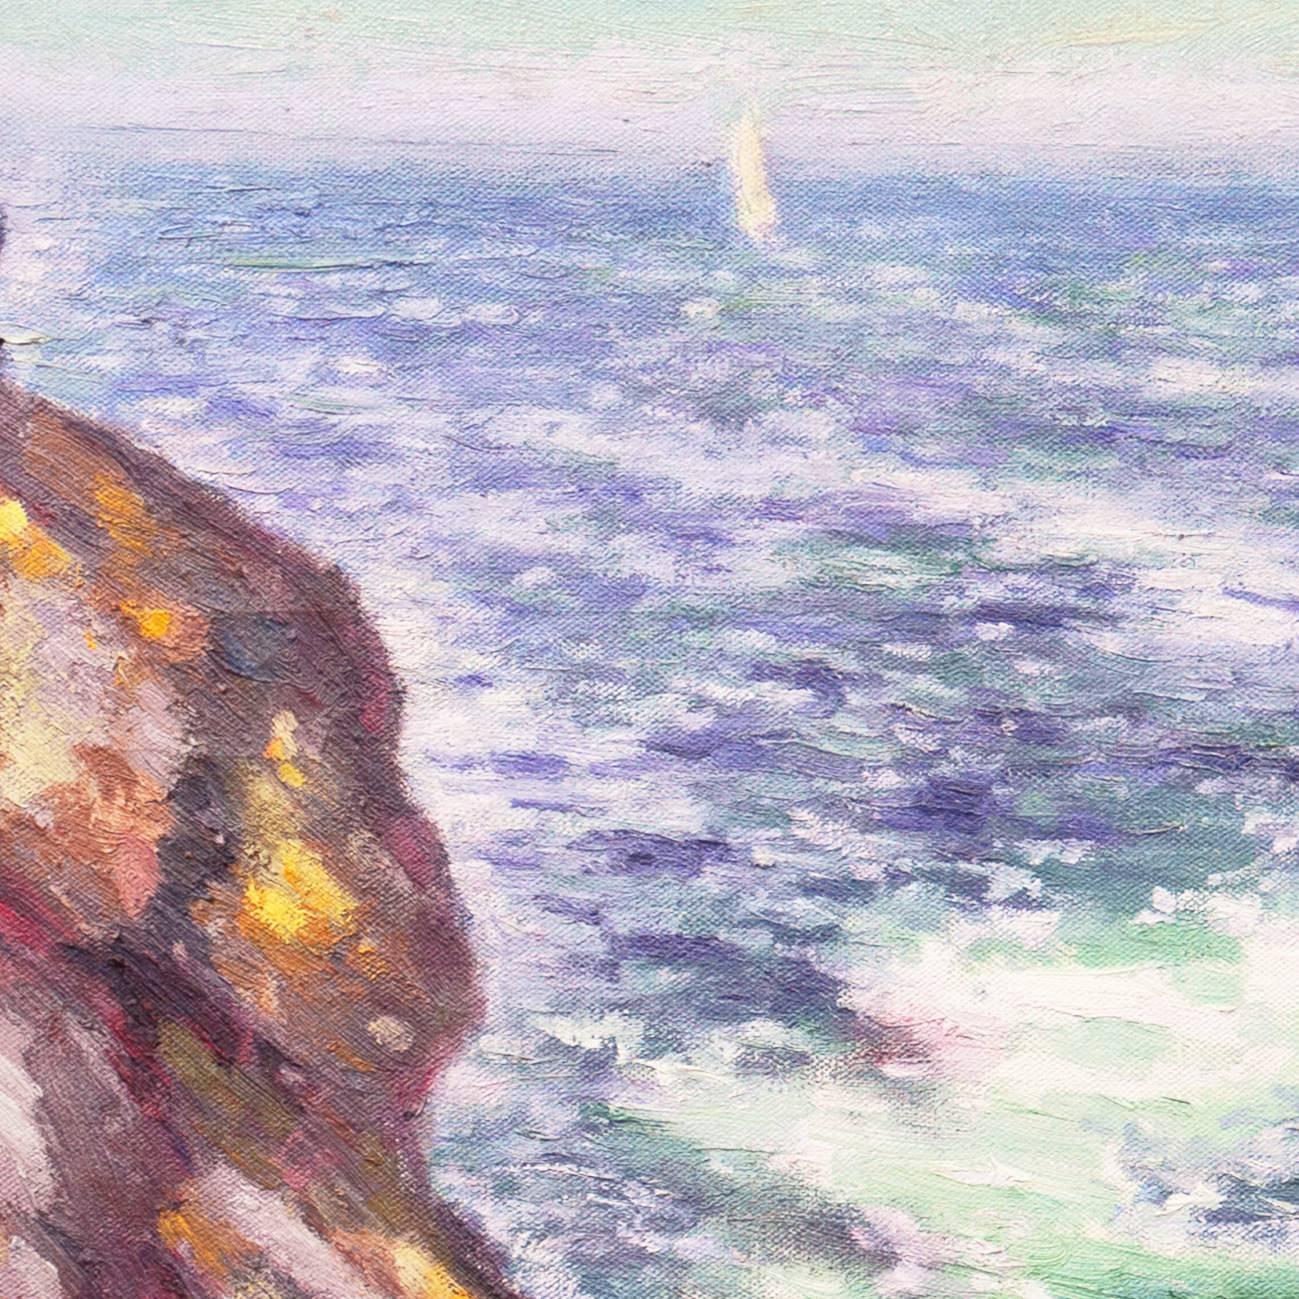 'New England Coast', Paris, New York, Royal Academy of Art, London, Benezit - American Impressionist Painting by Hugo Melville Fisher